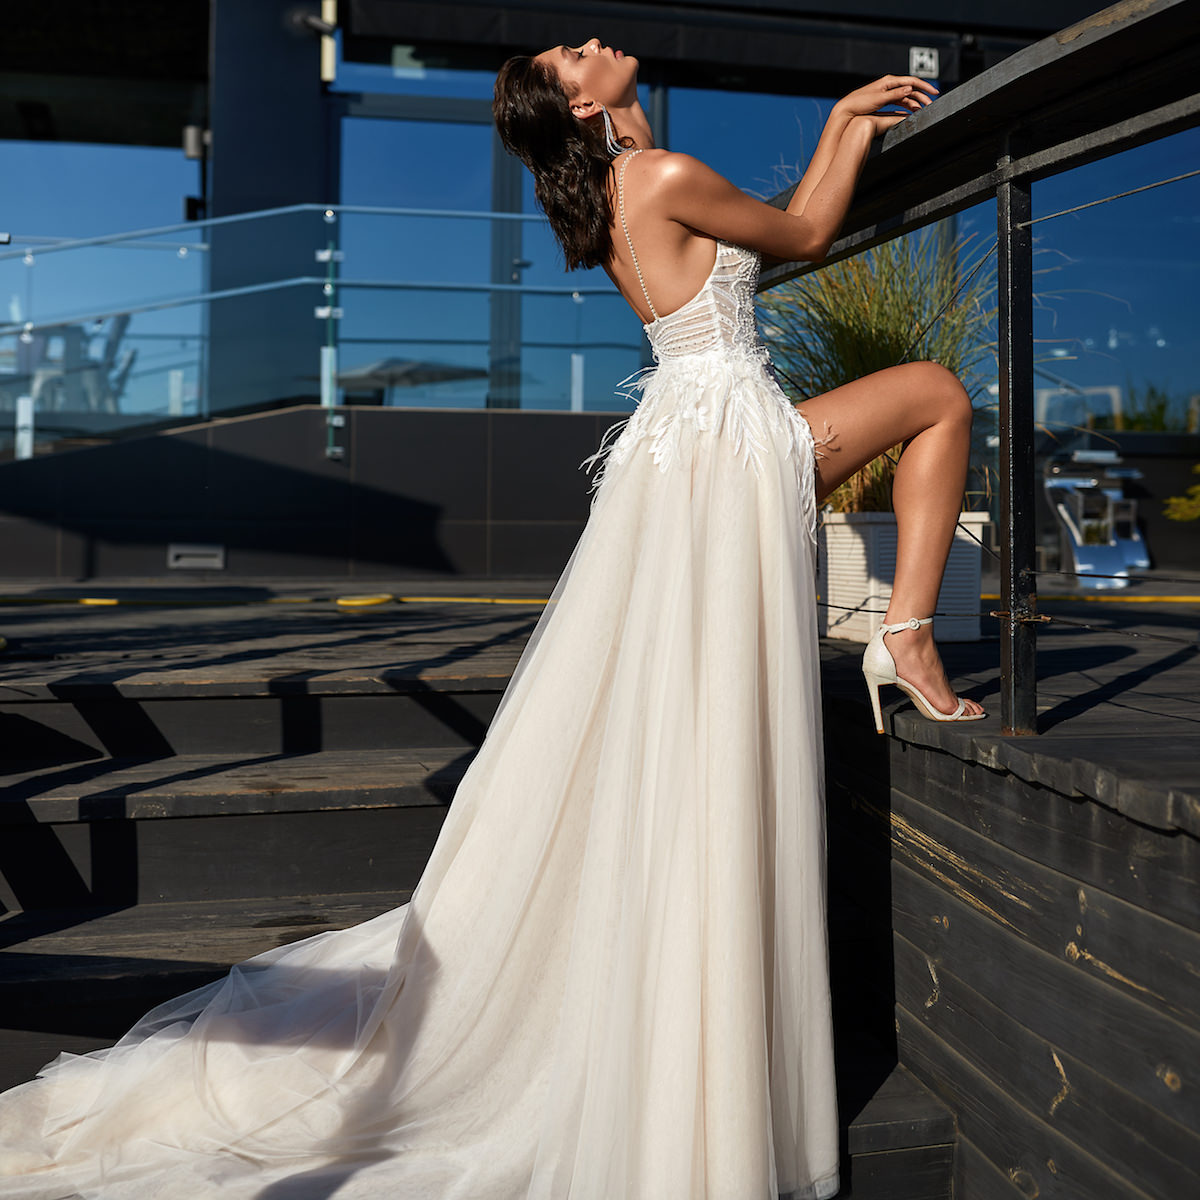 Ida Torez Wedding Dresses 2021 Brave Glance Collection